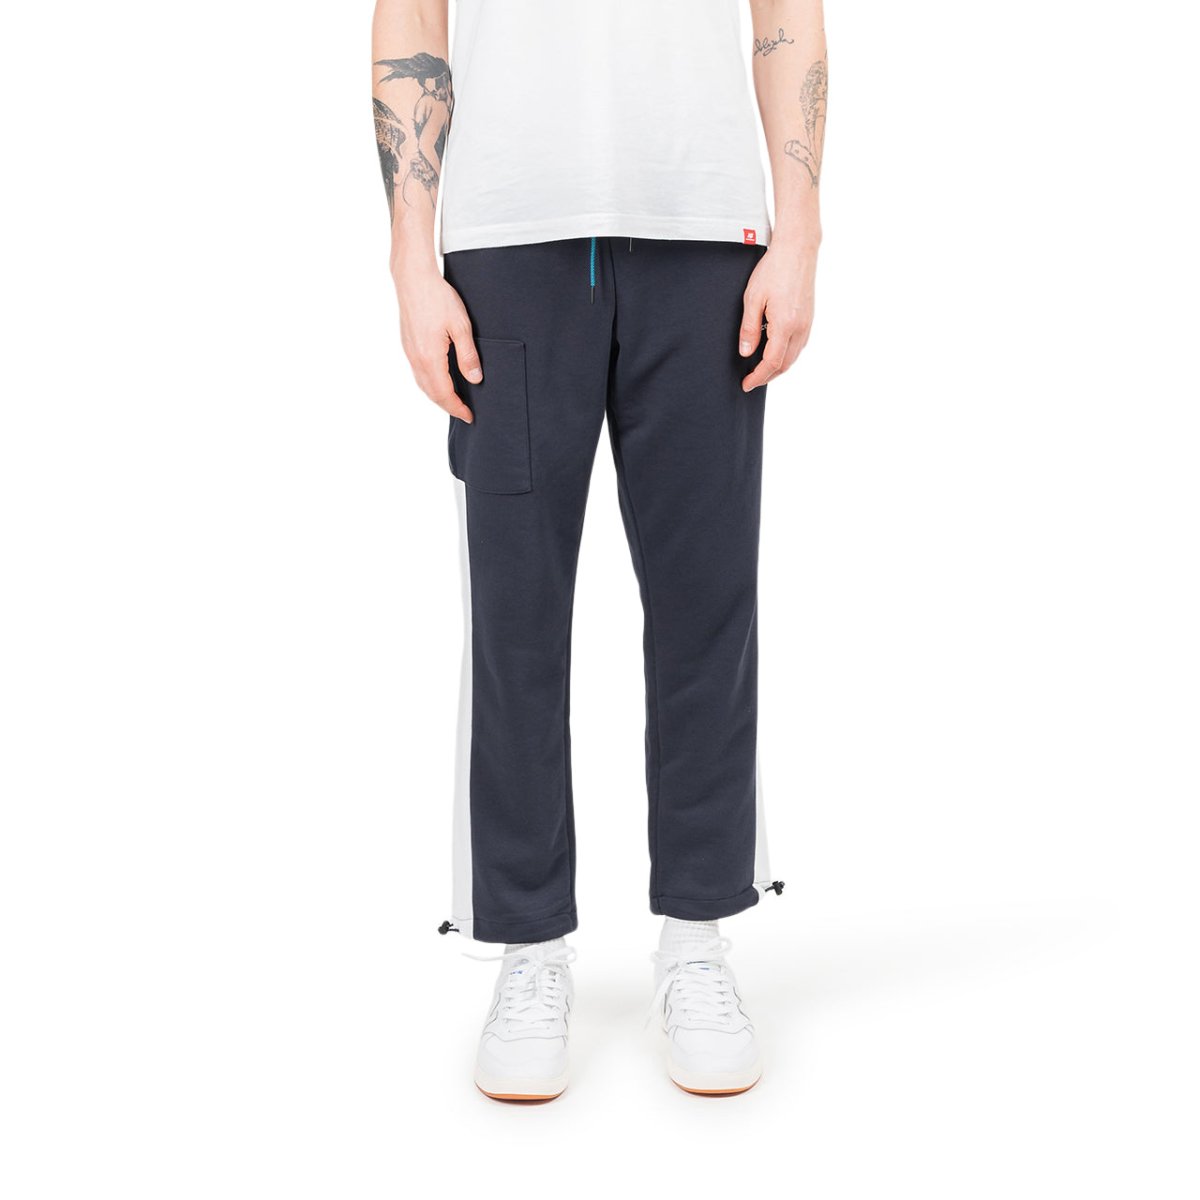 Image of New Balance Athletics Fleece Pants (Navy)